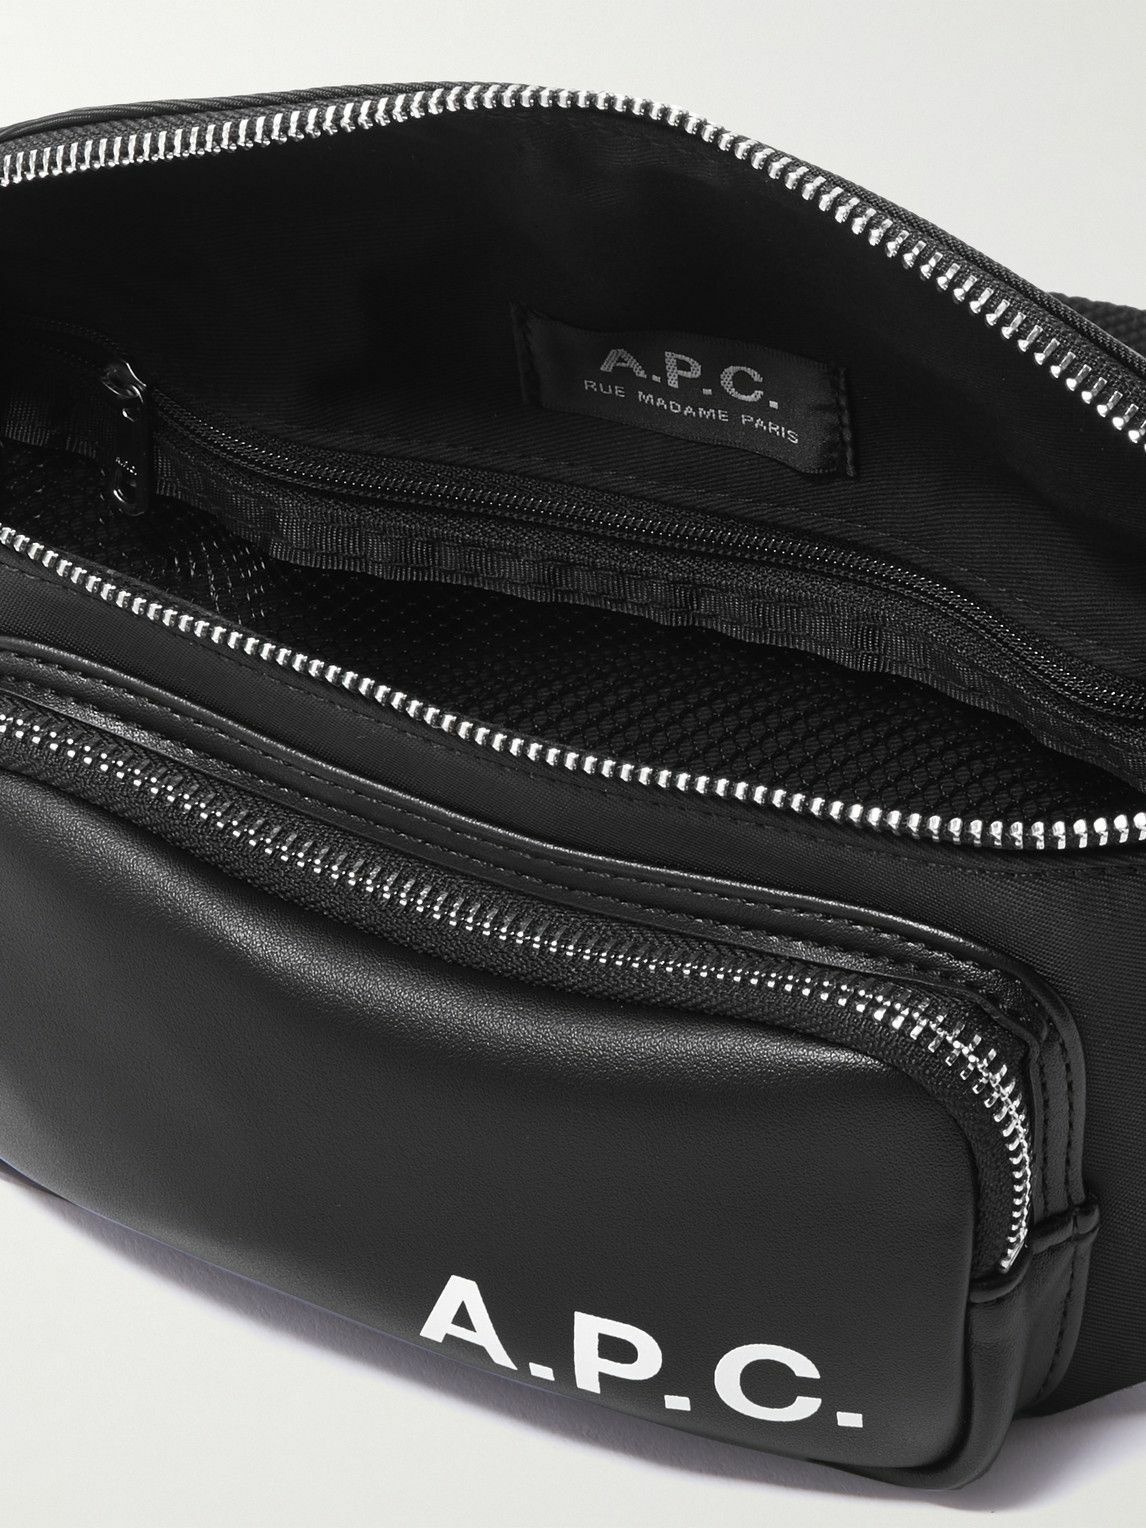 A.P.C. - Logo-Print Leather-Trimmed Shell Belt Bag